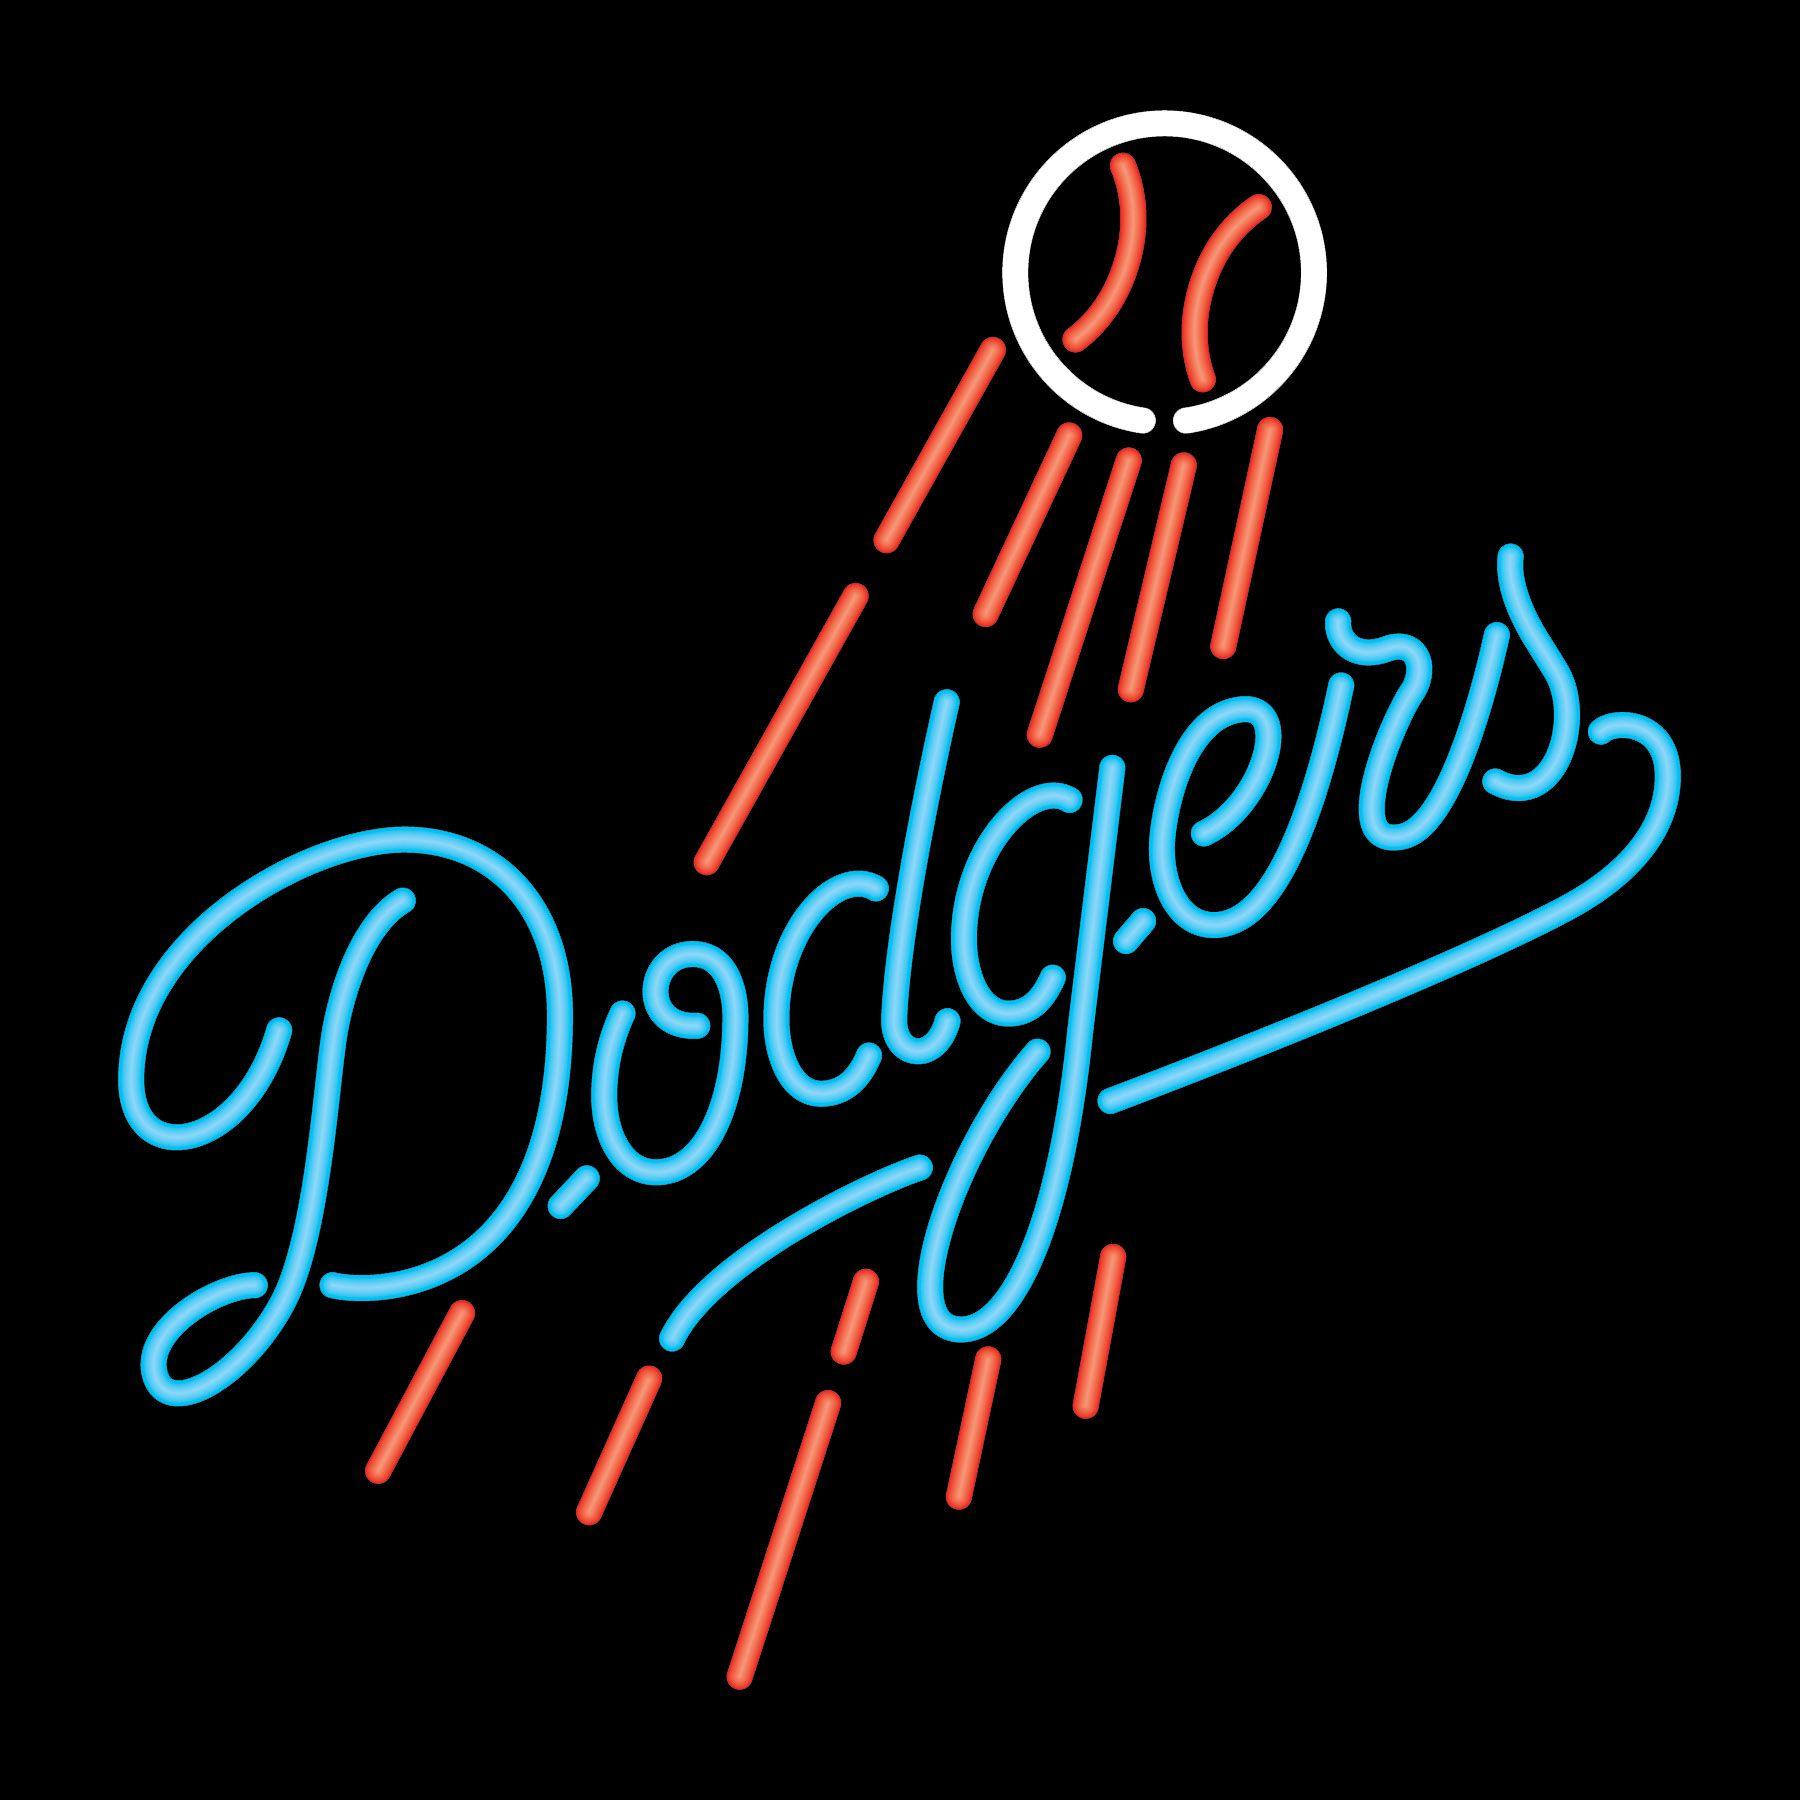 Dodgers MLB Wallpaper by Lukeman8610 on DeviantArt